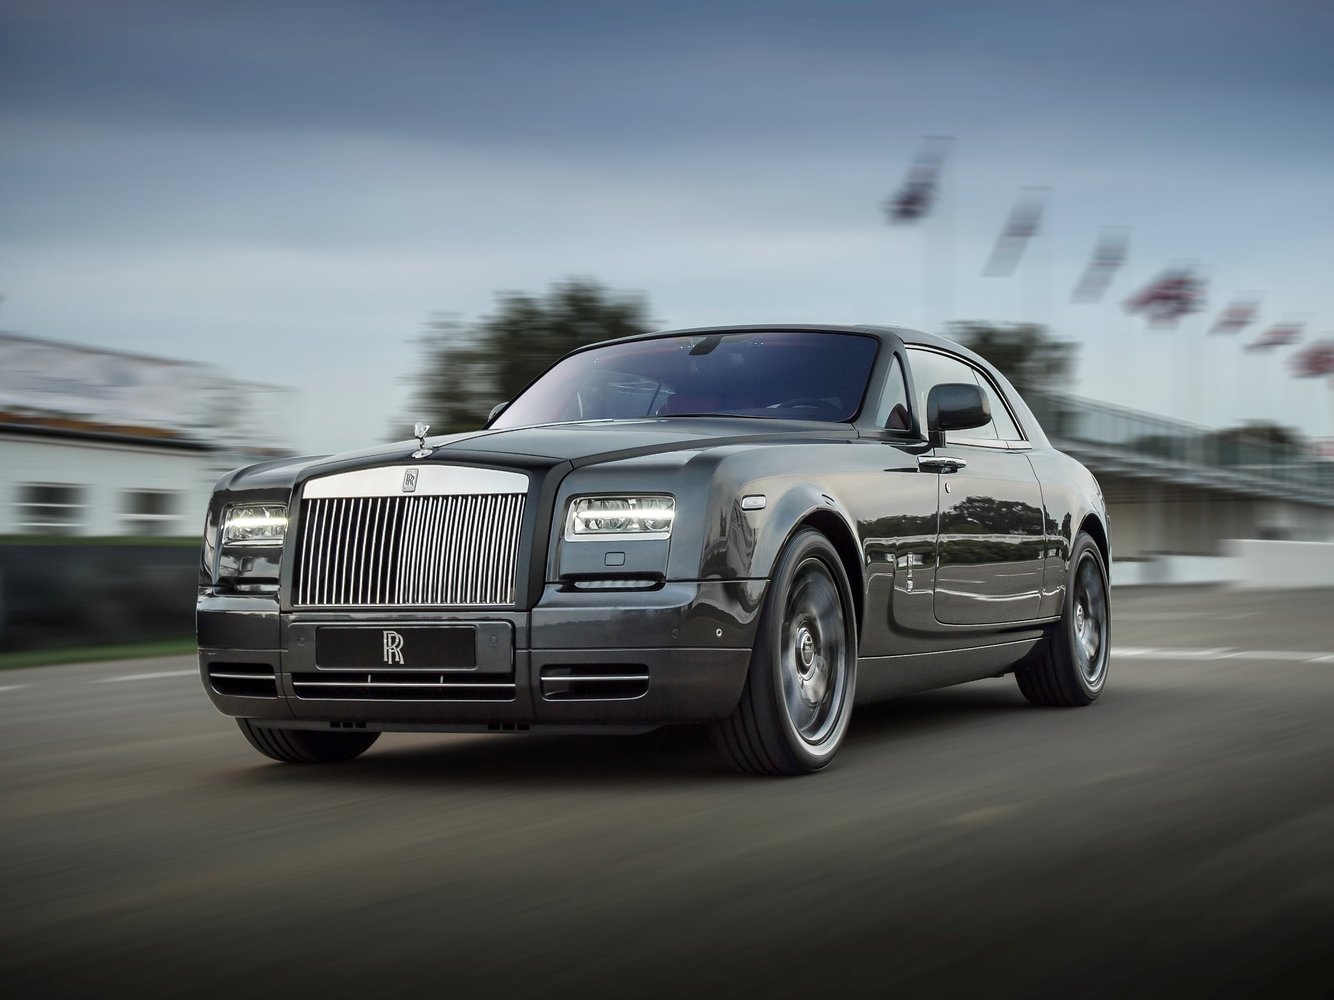 Rolls-Royce Phantom 2012 - 2016